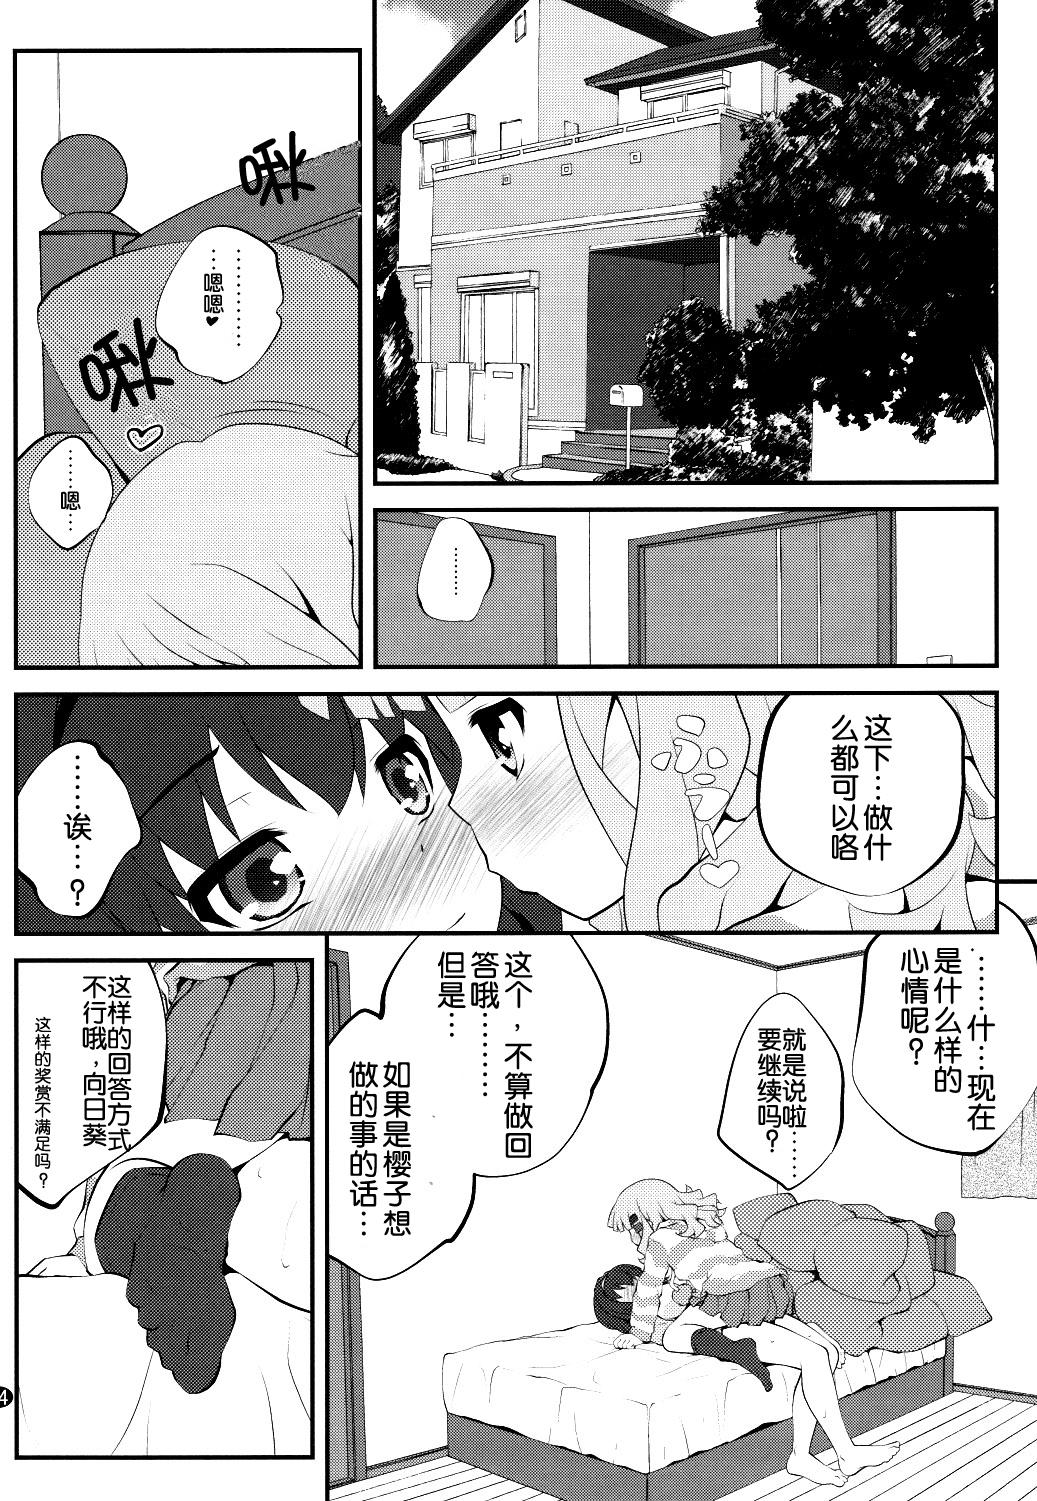 Mms Himegoto Flowers 7 - Yuruyuri Gapes Gaping Asshole - Page 4